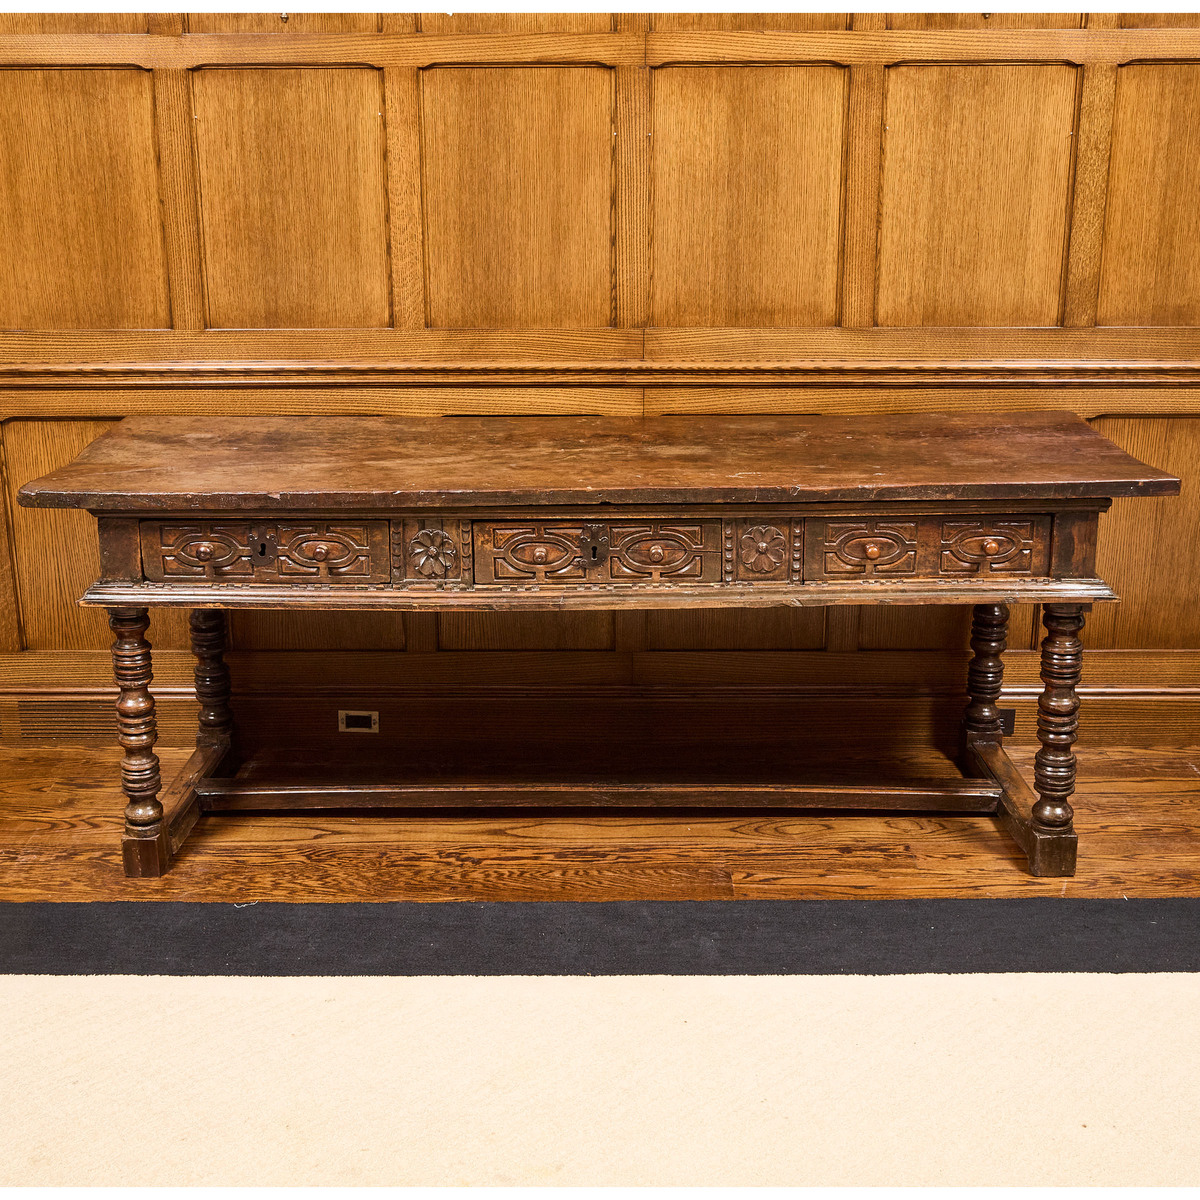 Elizabethan Walnut Refectory Table, c.1600, 34.75 x 91.5 x 30.75 in — 88.3 x 232.4 x 78.1 cm - Image 3 of 3